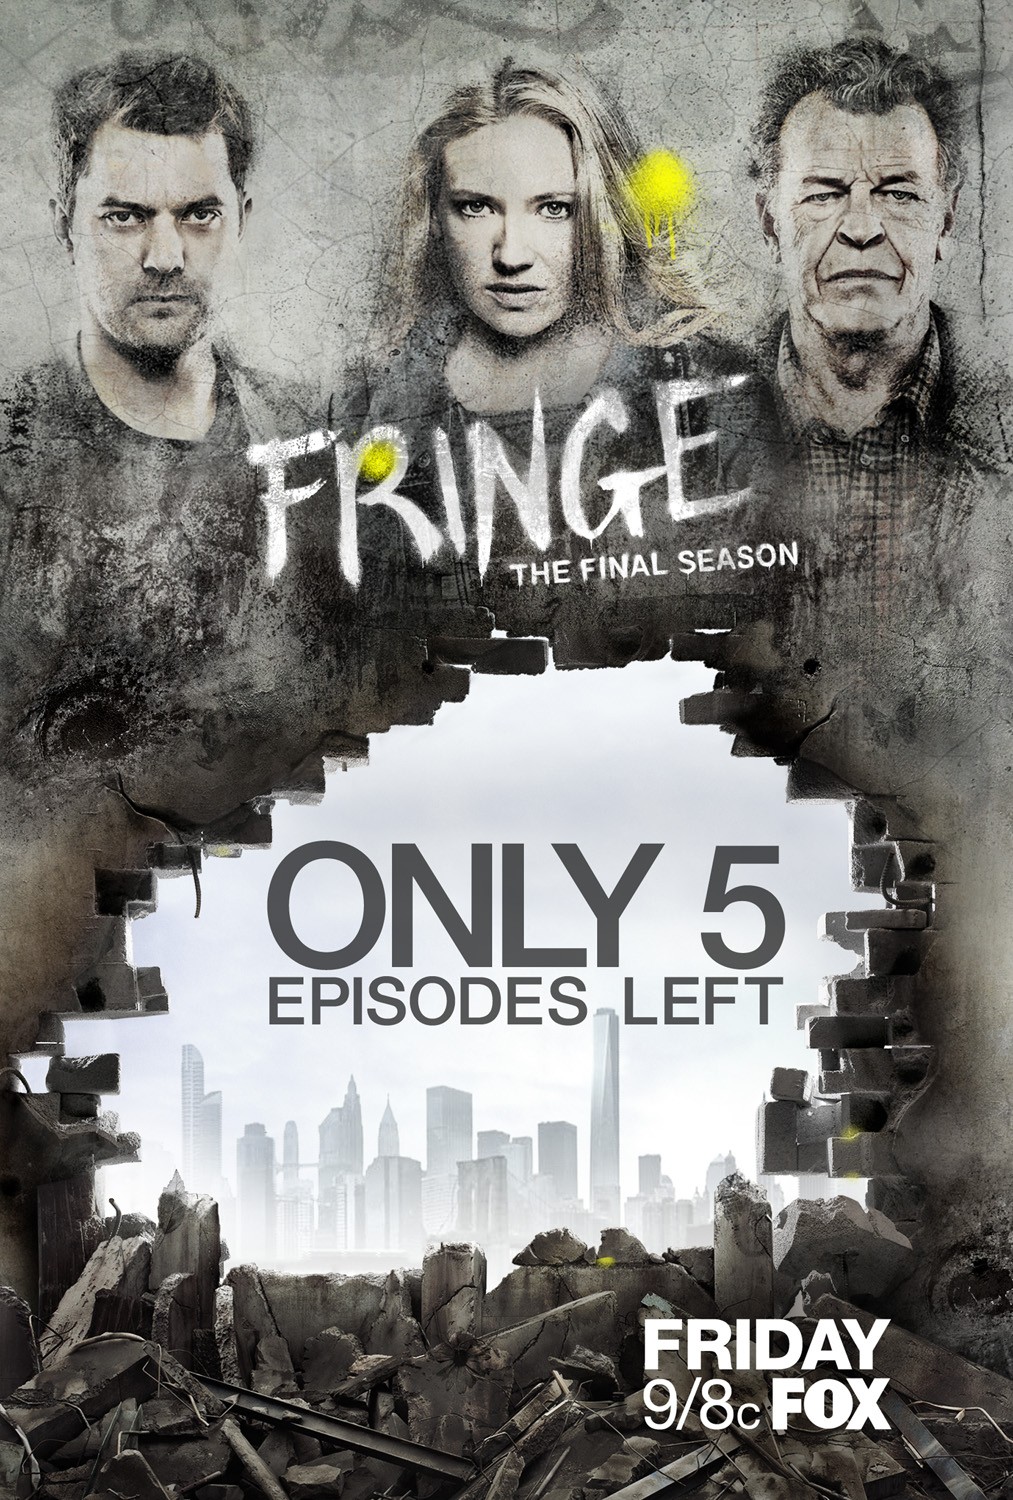 Extra Large TV Poster Image for Fringe (#28 of 33)